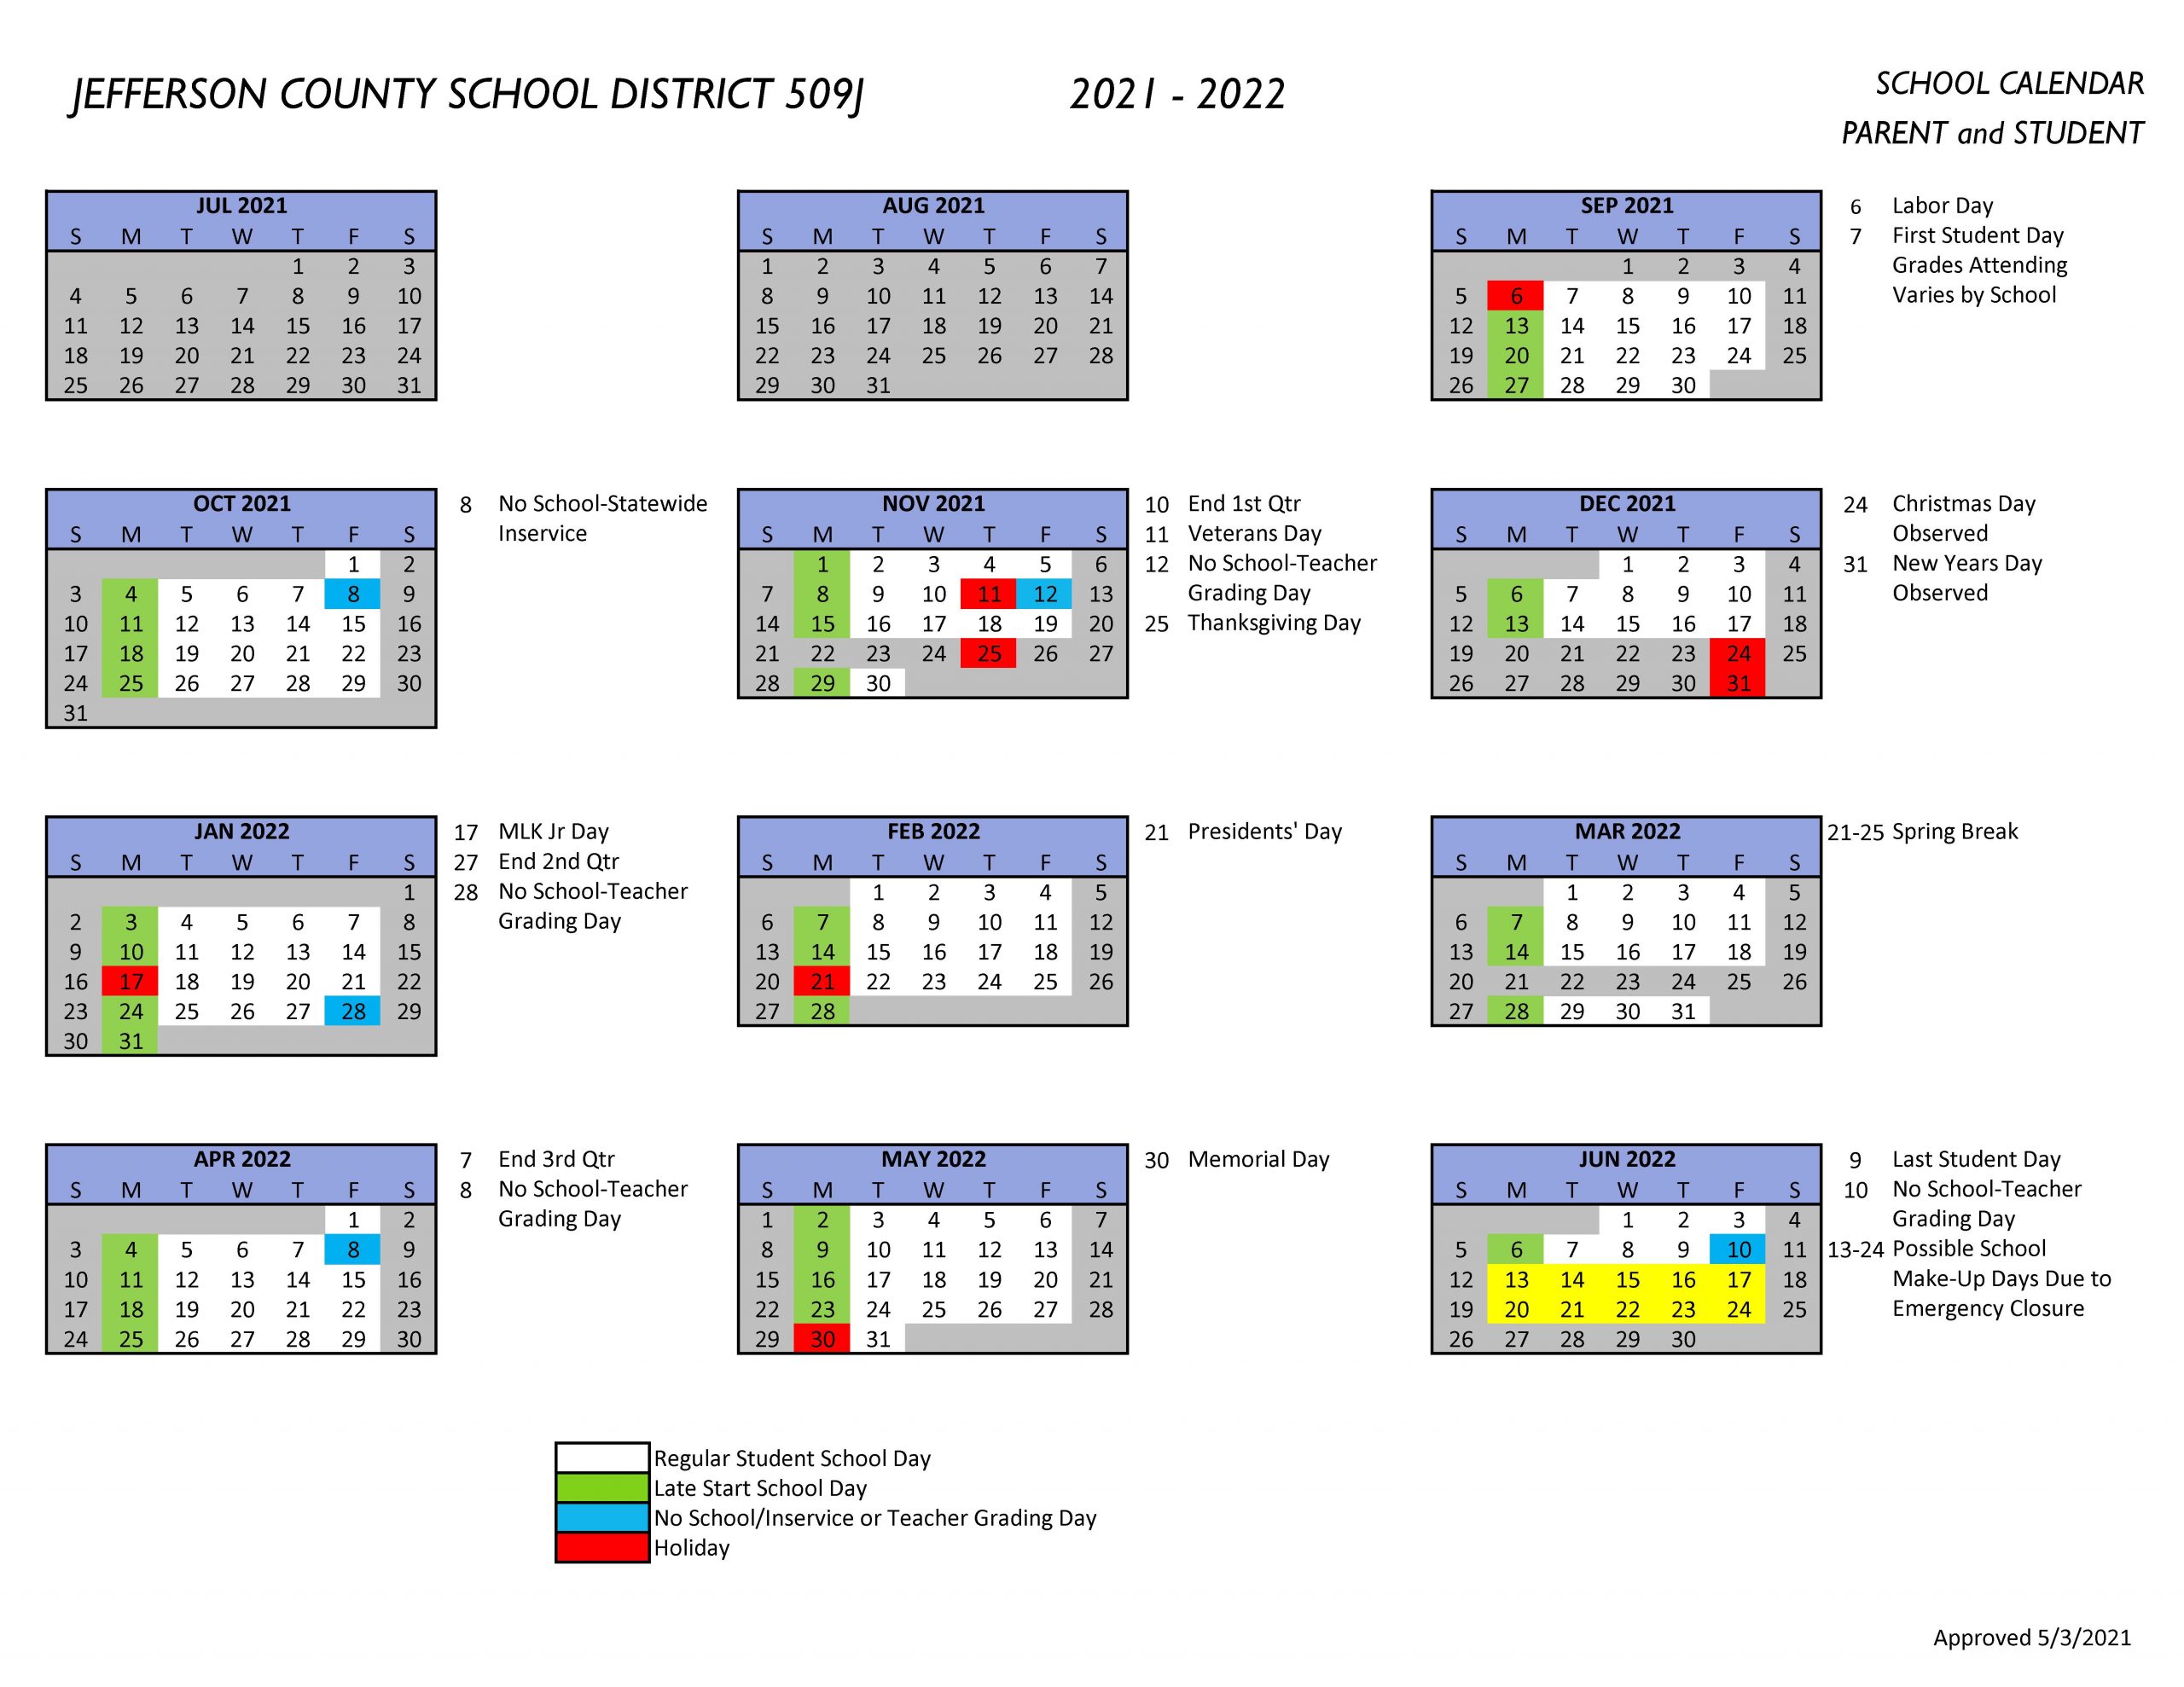 Jefferson.County Schools 2022 Calendar April 2022 Calendar